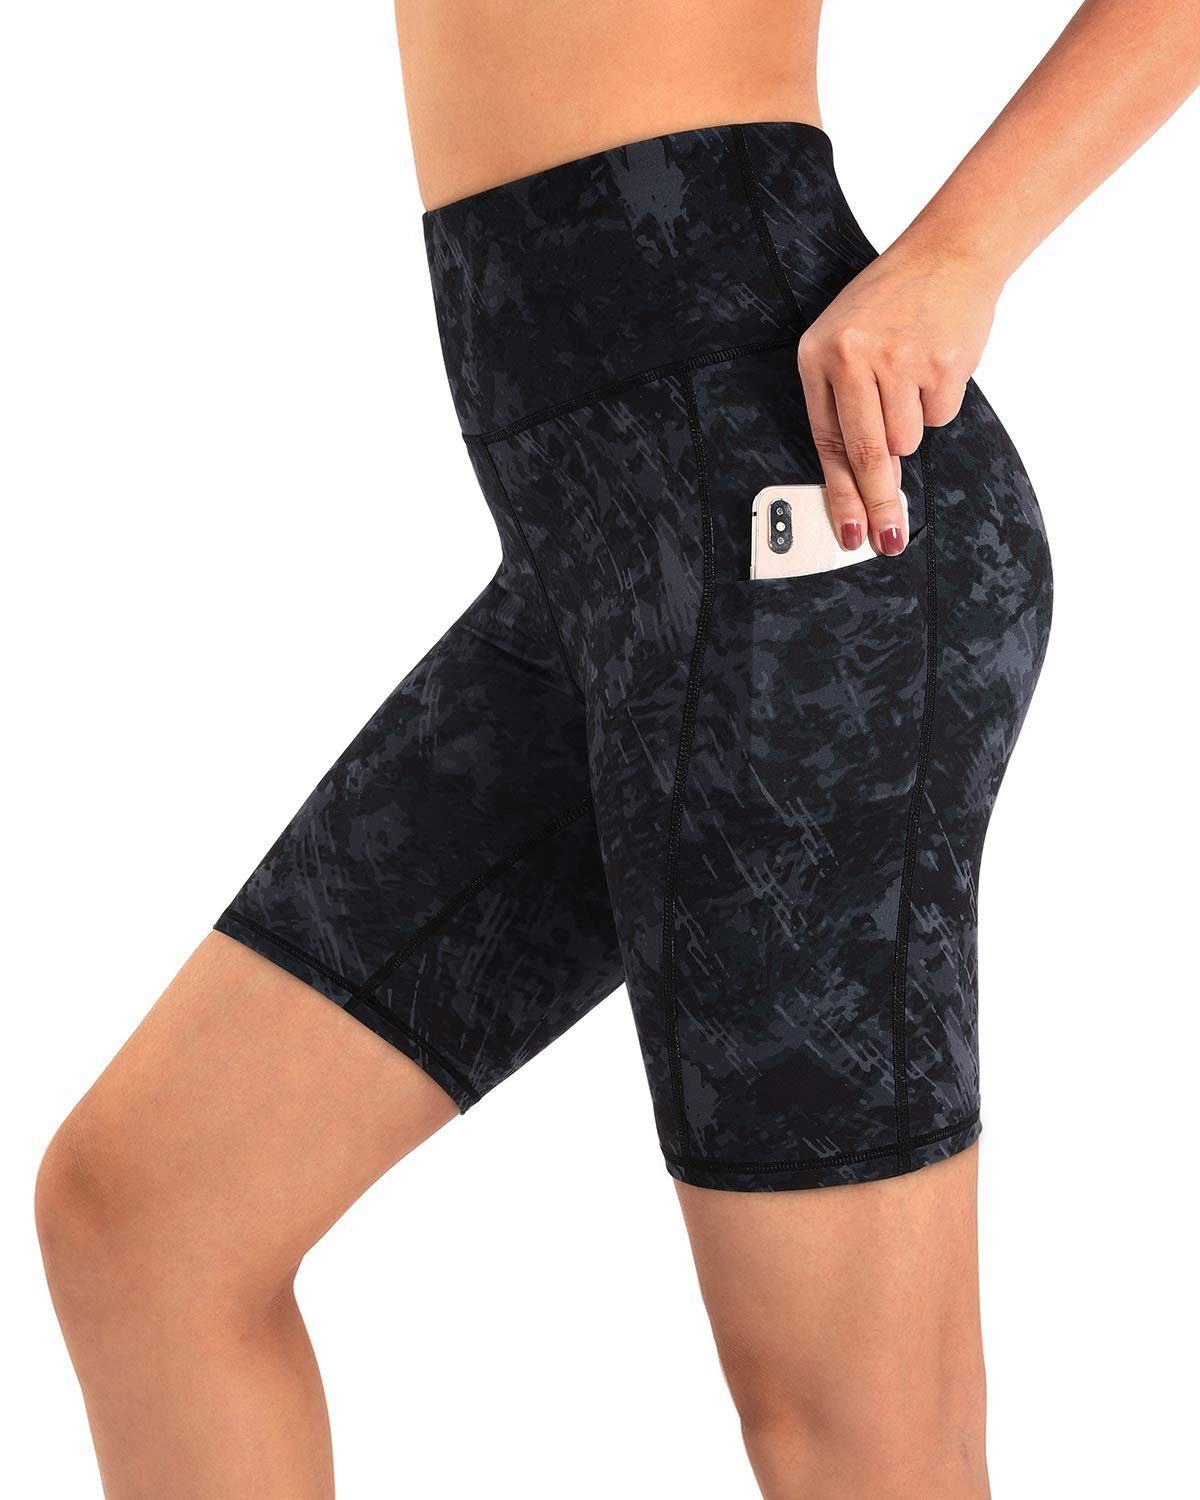 Damen Sport Leggins Shorts Hohe Taille Tights 3/4 Yogahose Blickdichte Kurz Laufhos Fitness Hosen Jogginghose mit Taschen Short 